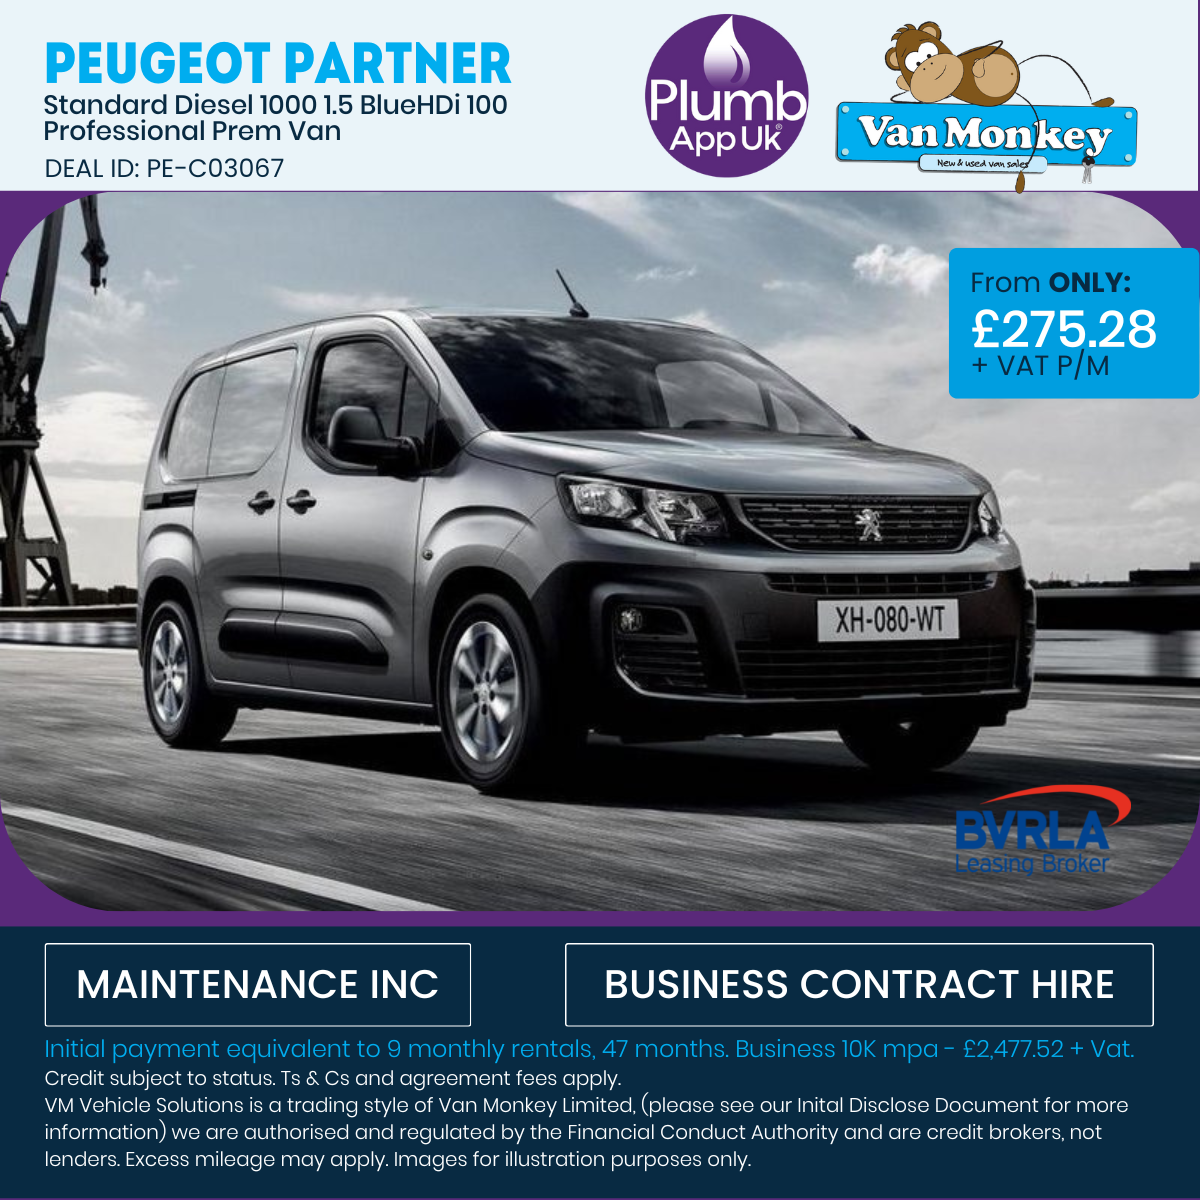 Peugeot Partner - GA Maintenance (2)